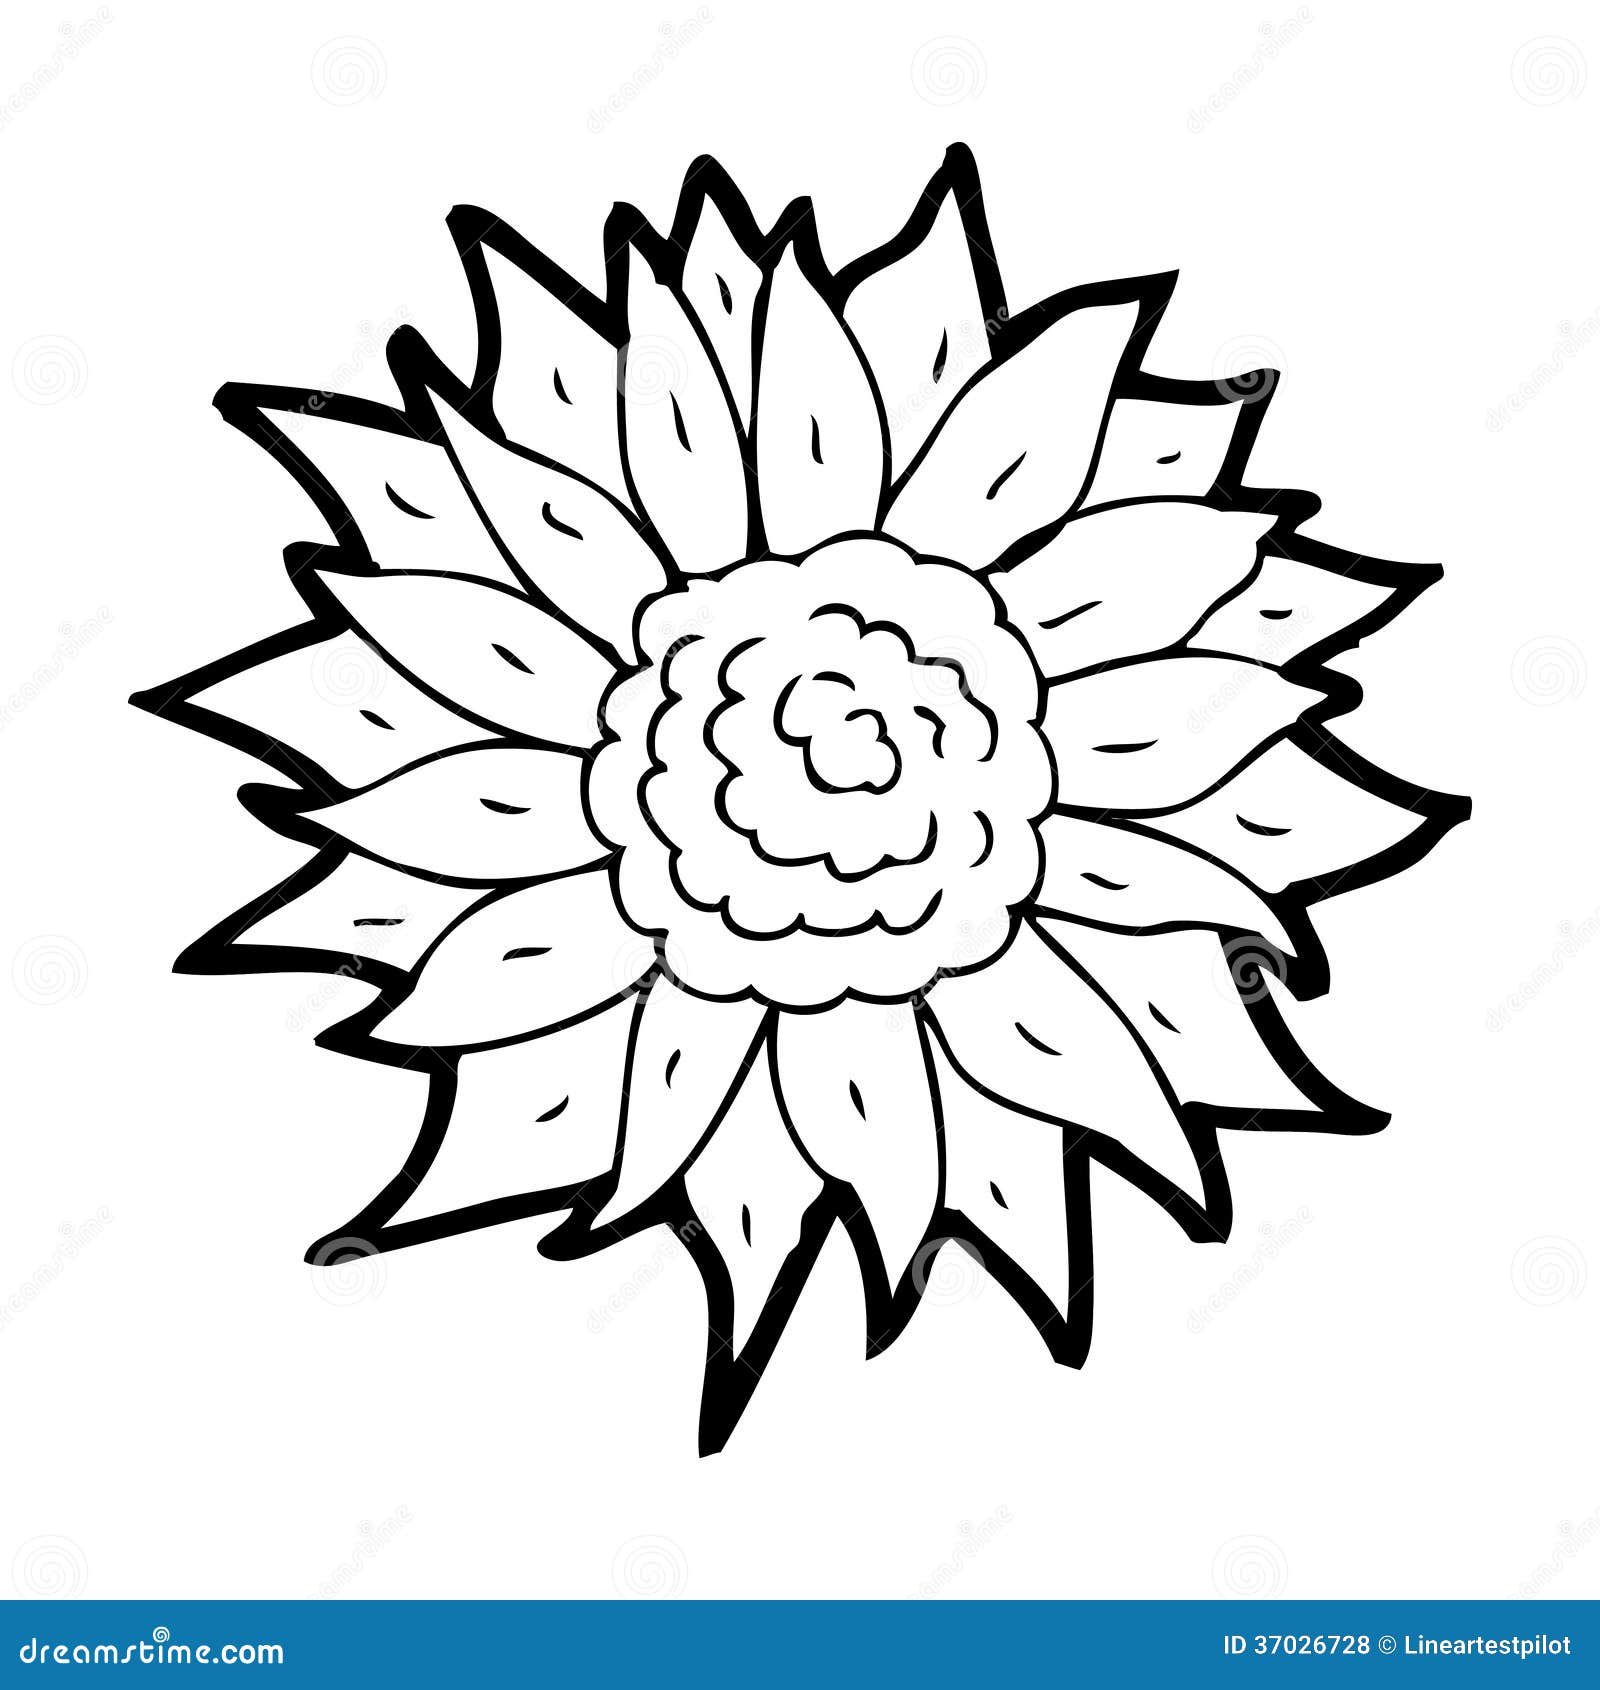 Cartoon sunflower stock illustration. Illustration of drawn - 37026728